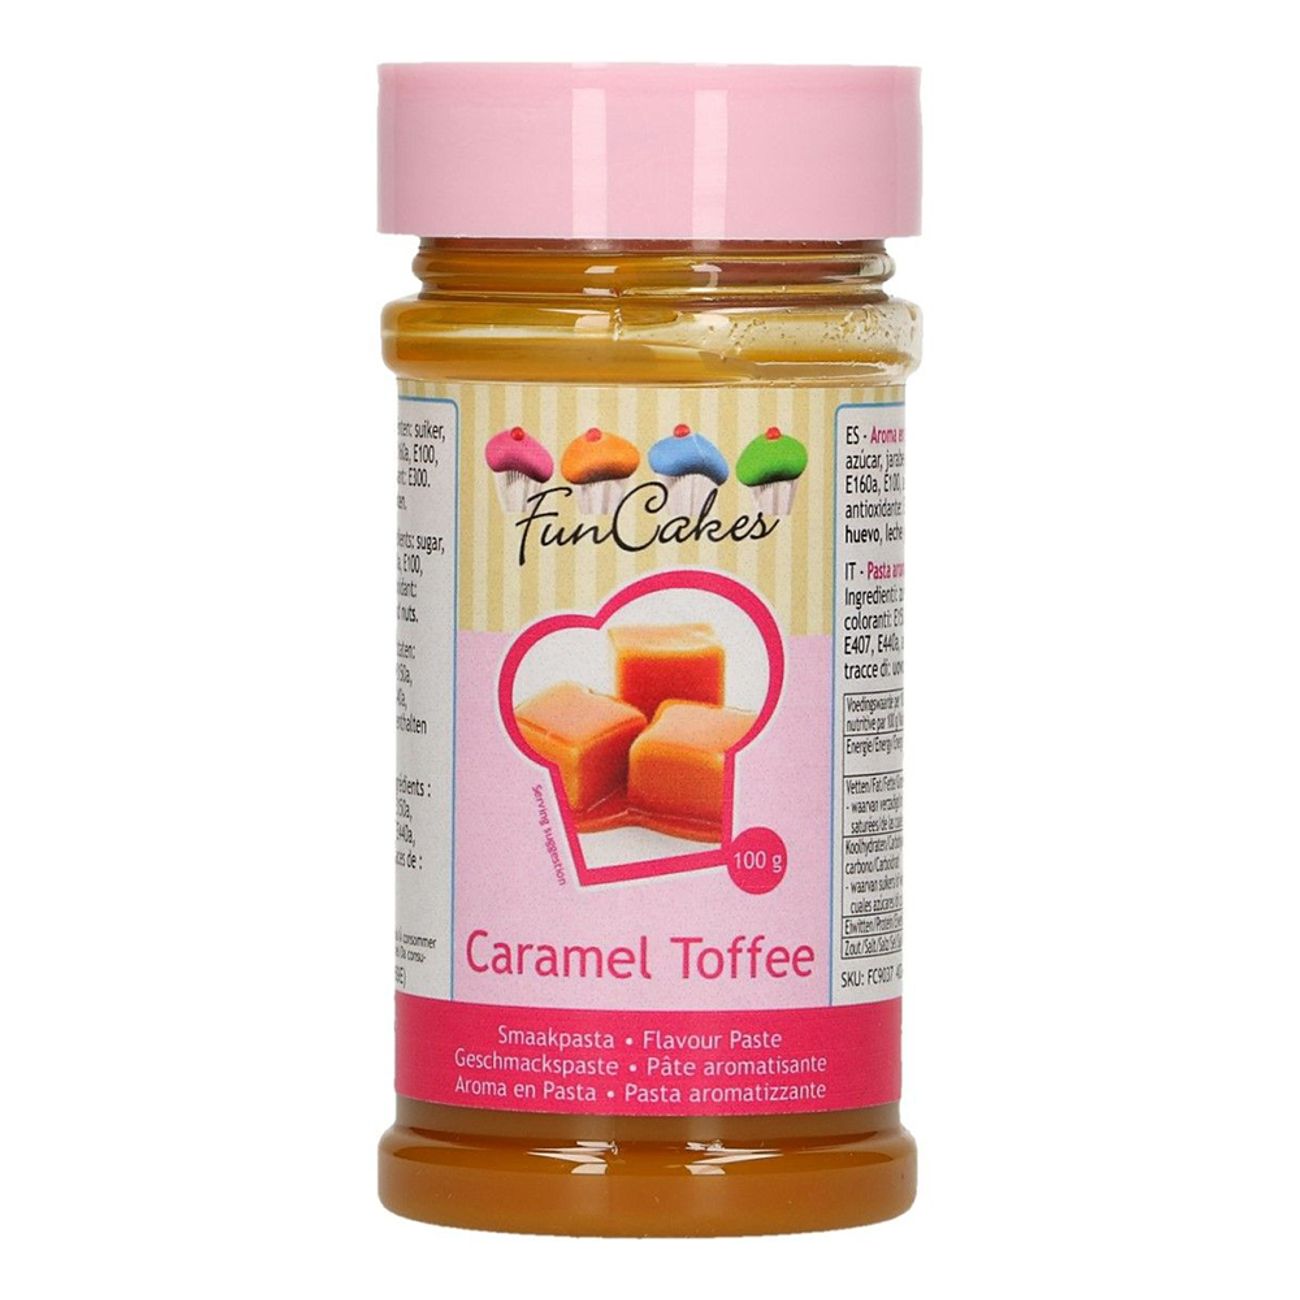 -funcakes-smaksattning-caramel-toffee-75558-1